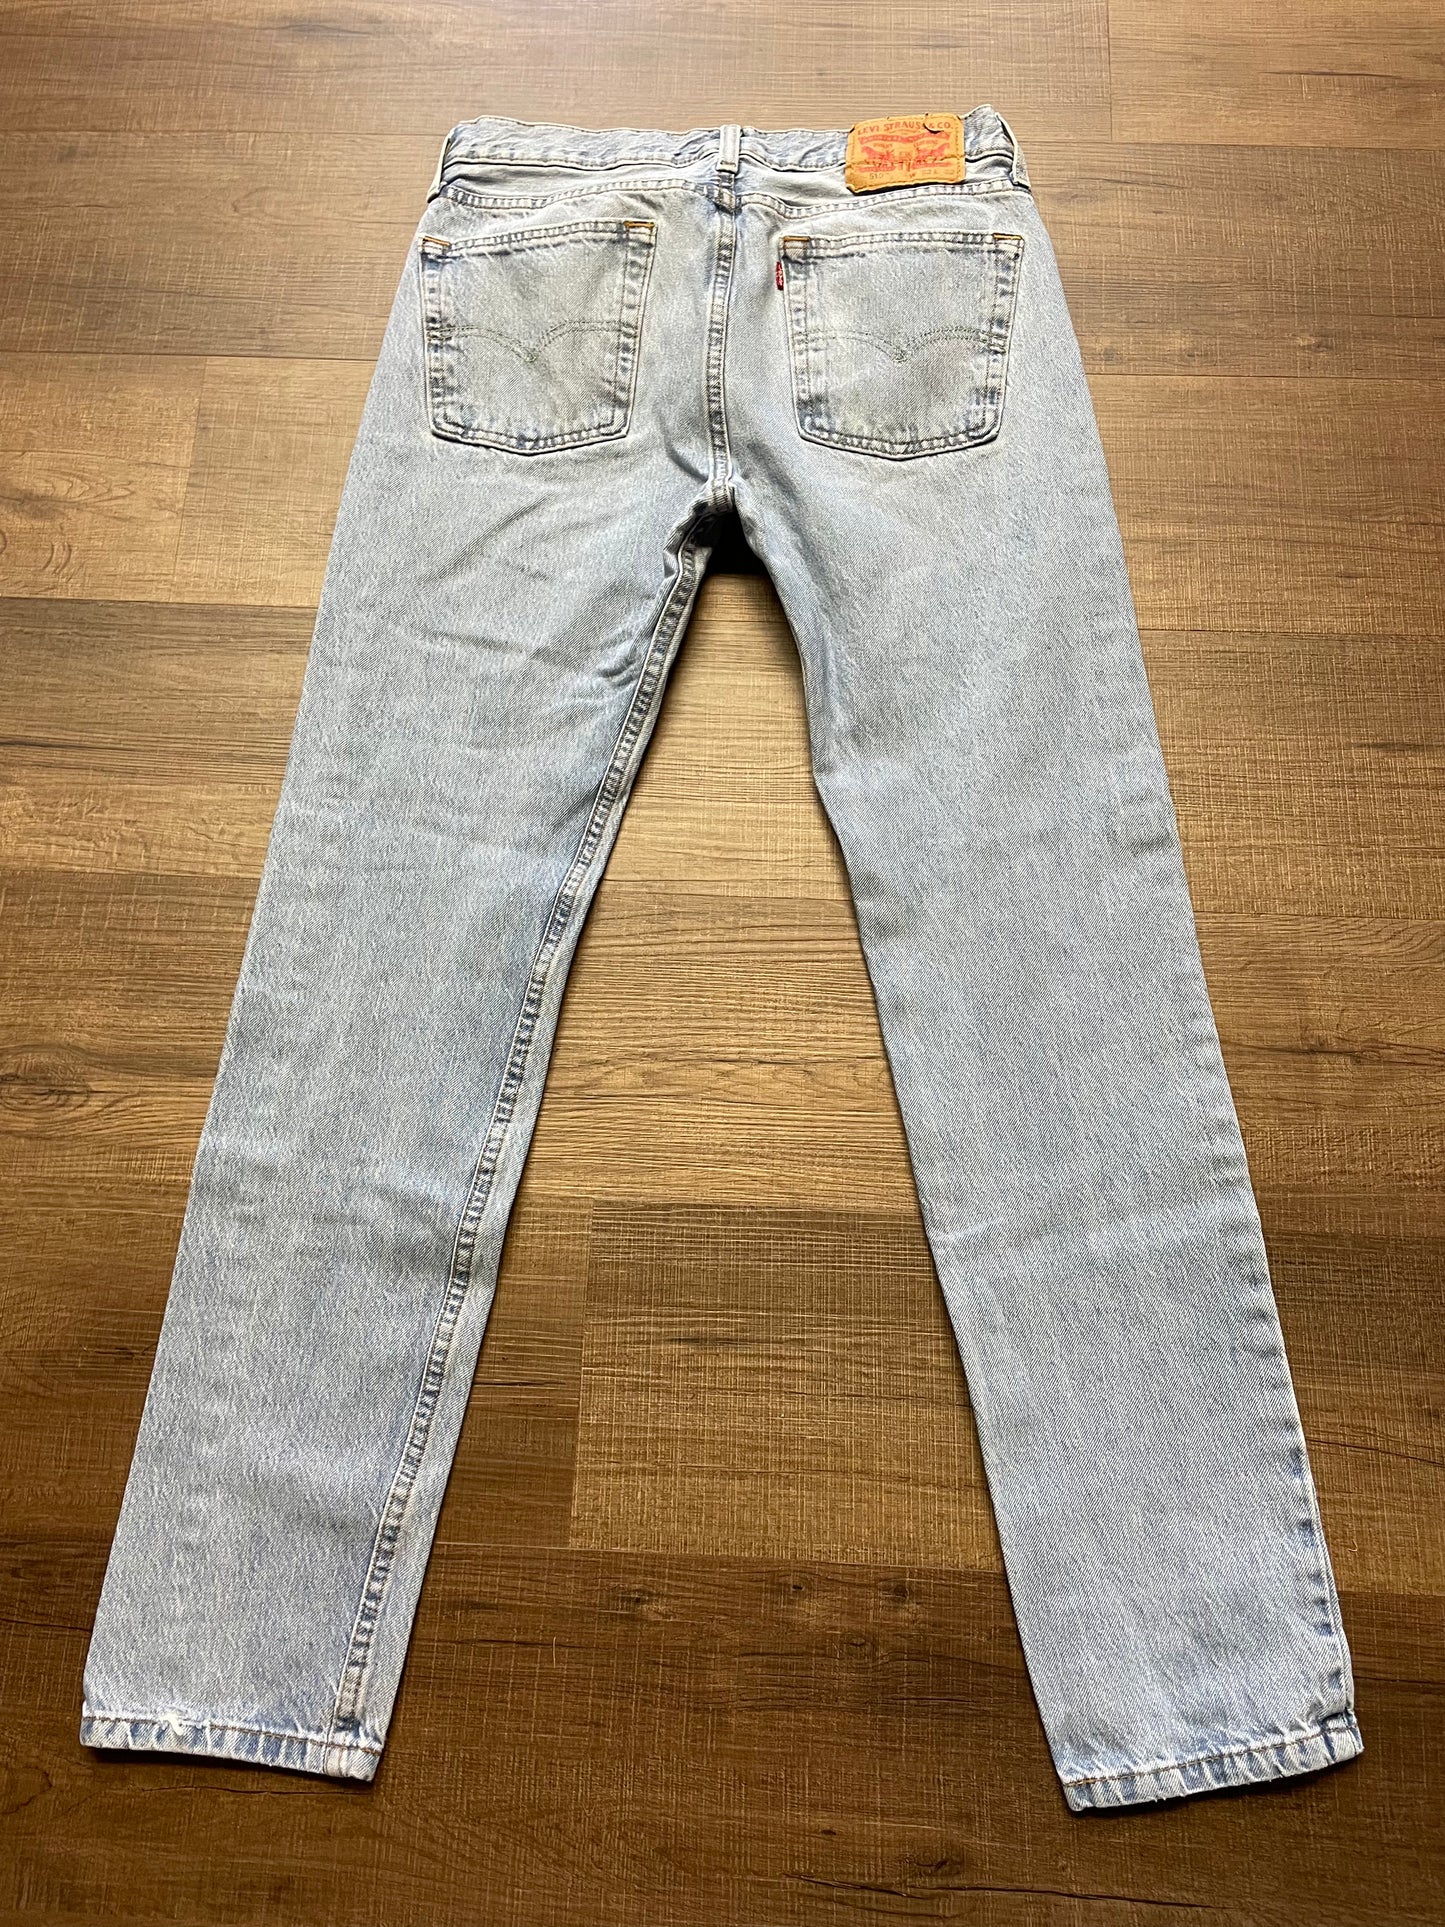 Levi's Original Men's Jeans (32x32)